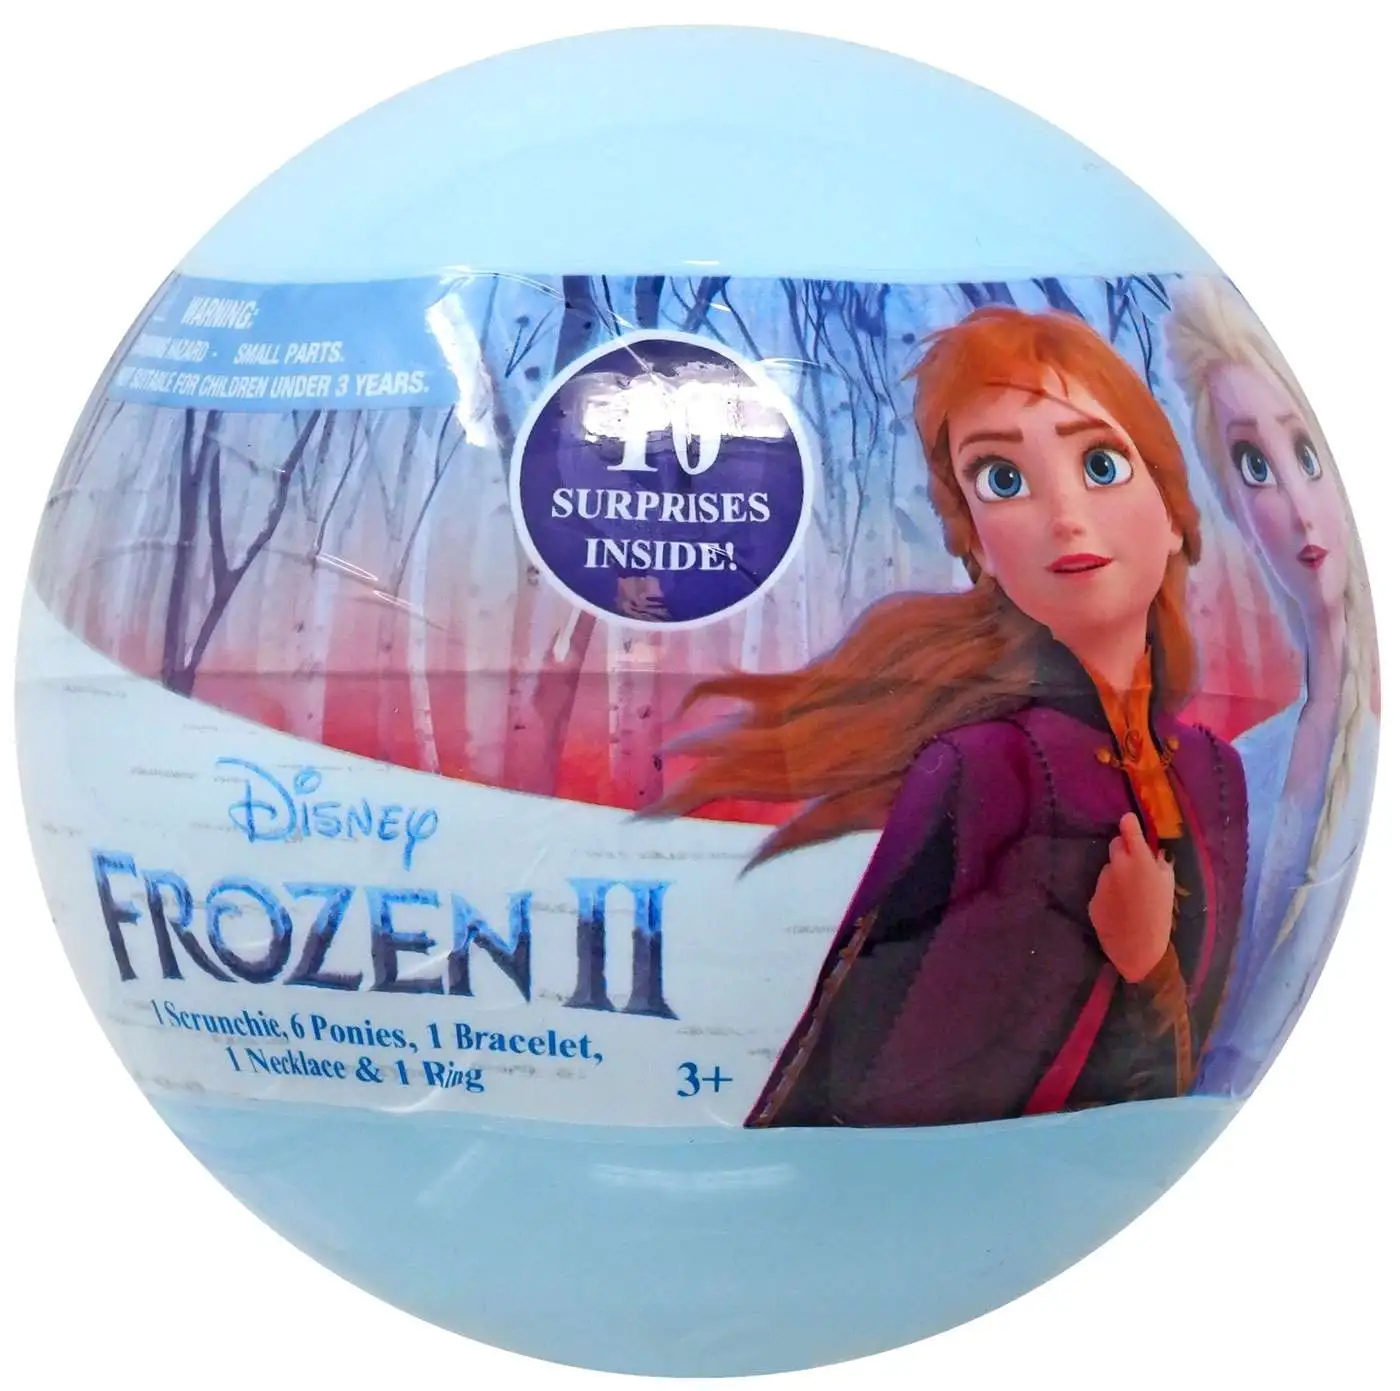 Disney's Frozen 2 Children's Collection Toy Accessories Activity Play Packs 